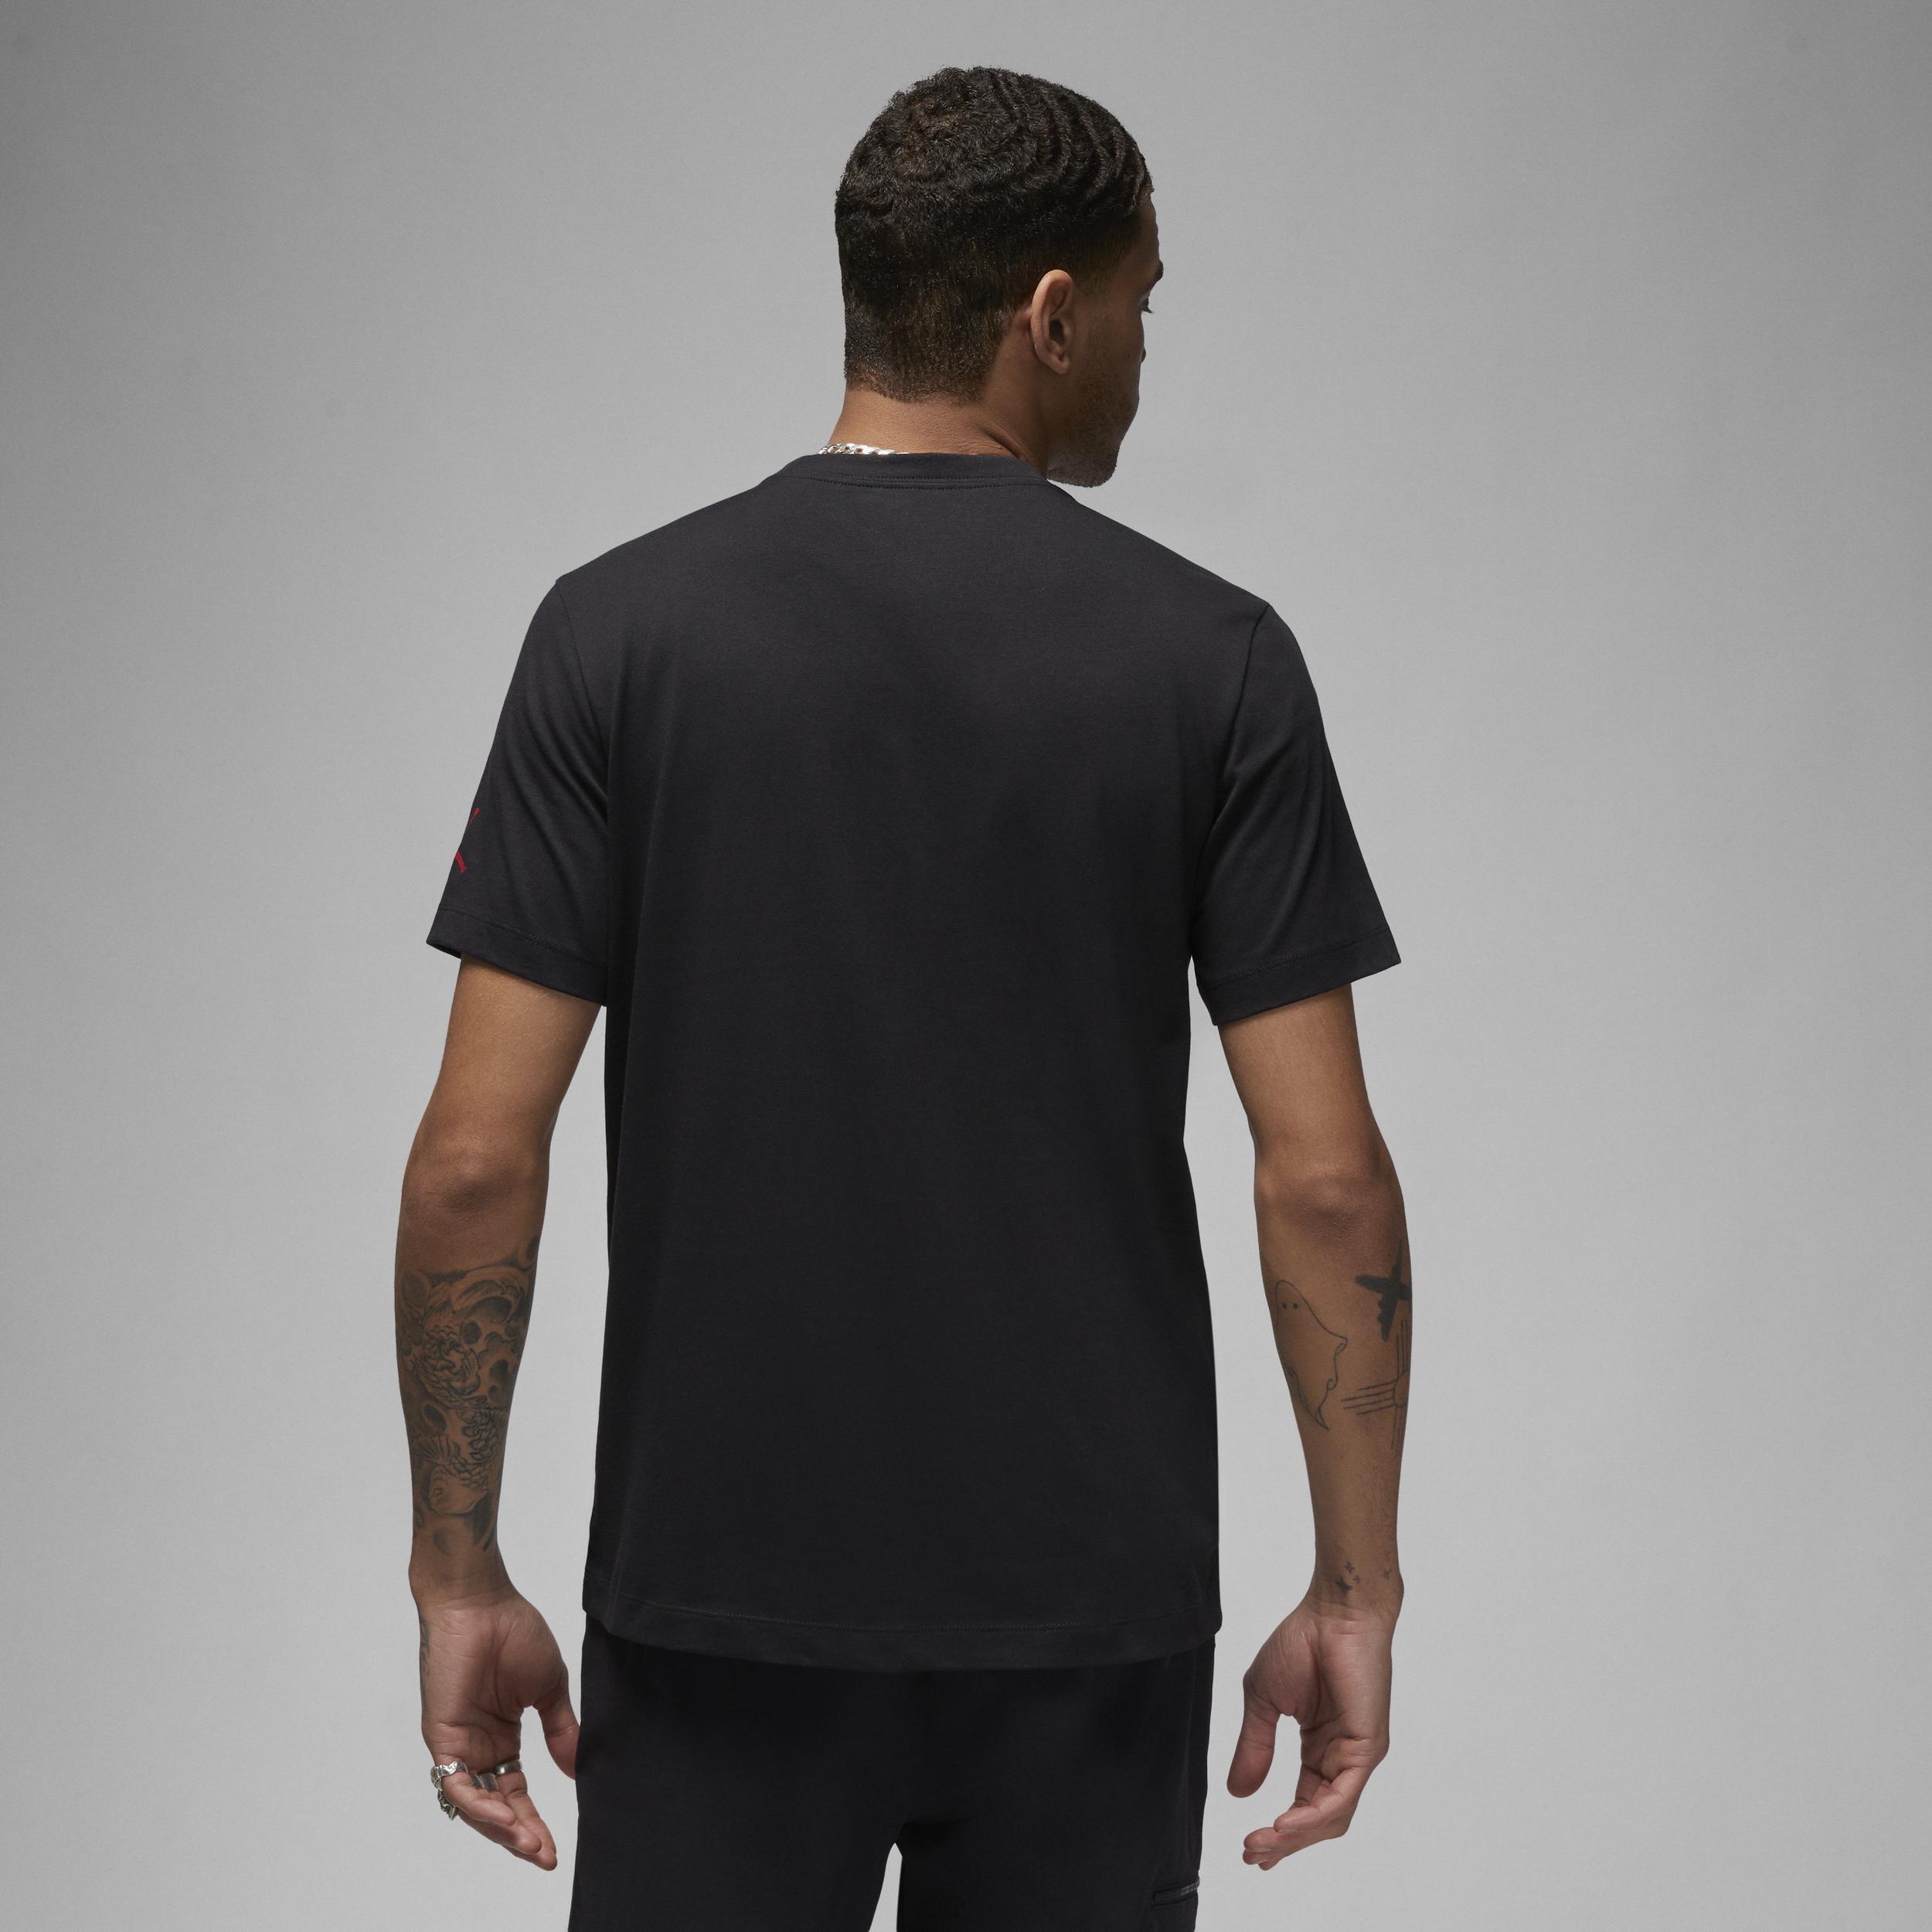 Golden State Warriors Nike Pre-Game Shooting Performance Long Sleeve  T-Shirt - Royal